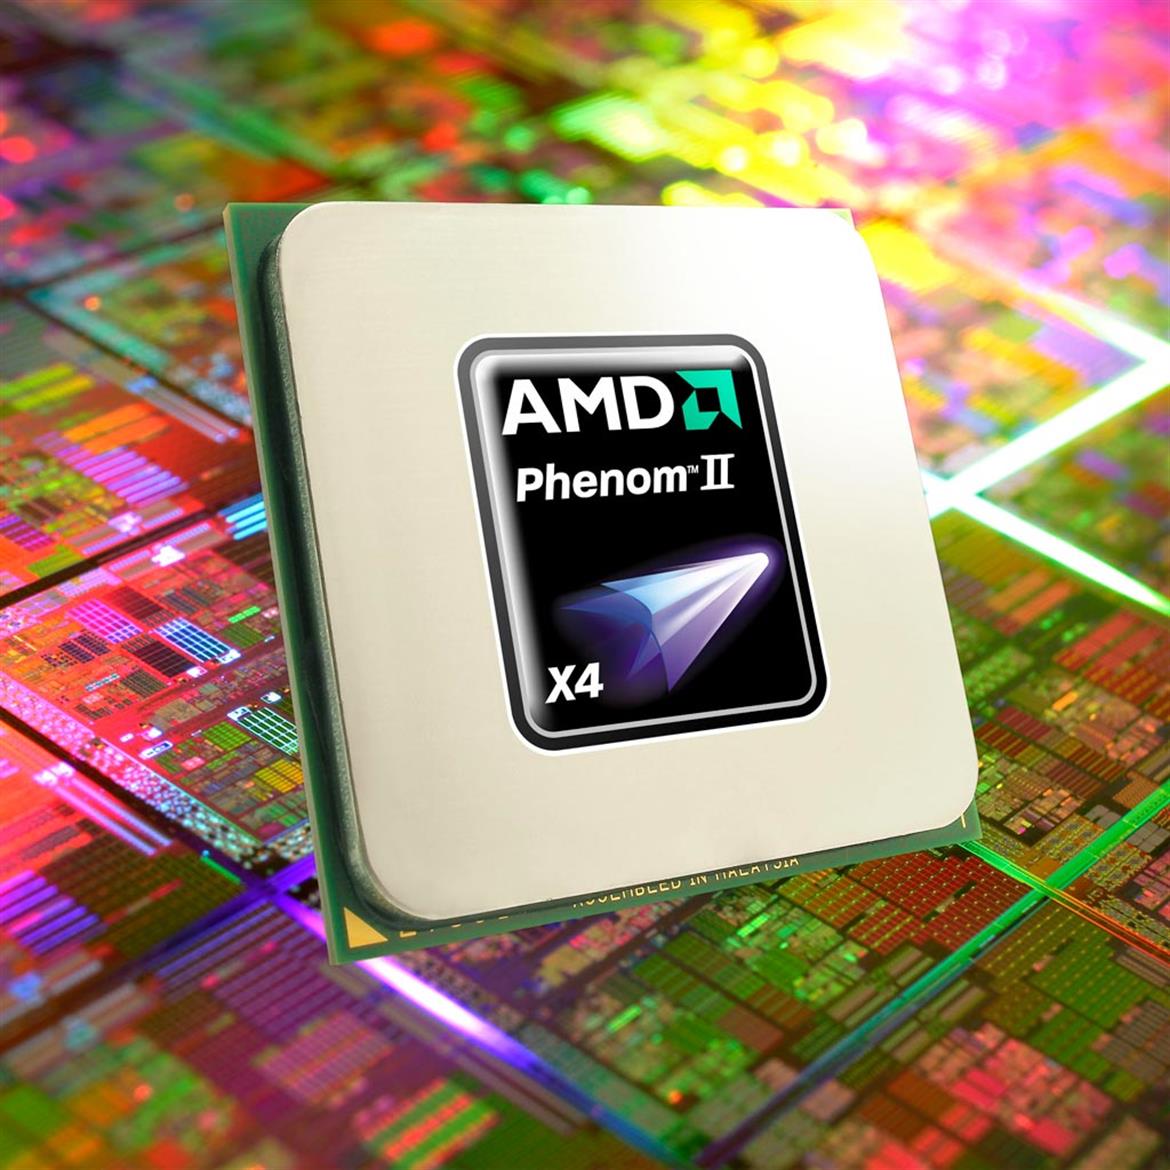 AMD Launches 125W Phenom II X4 965 CPU